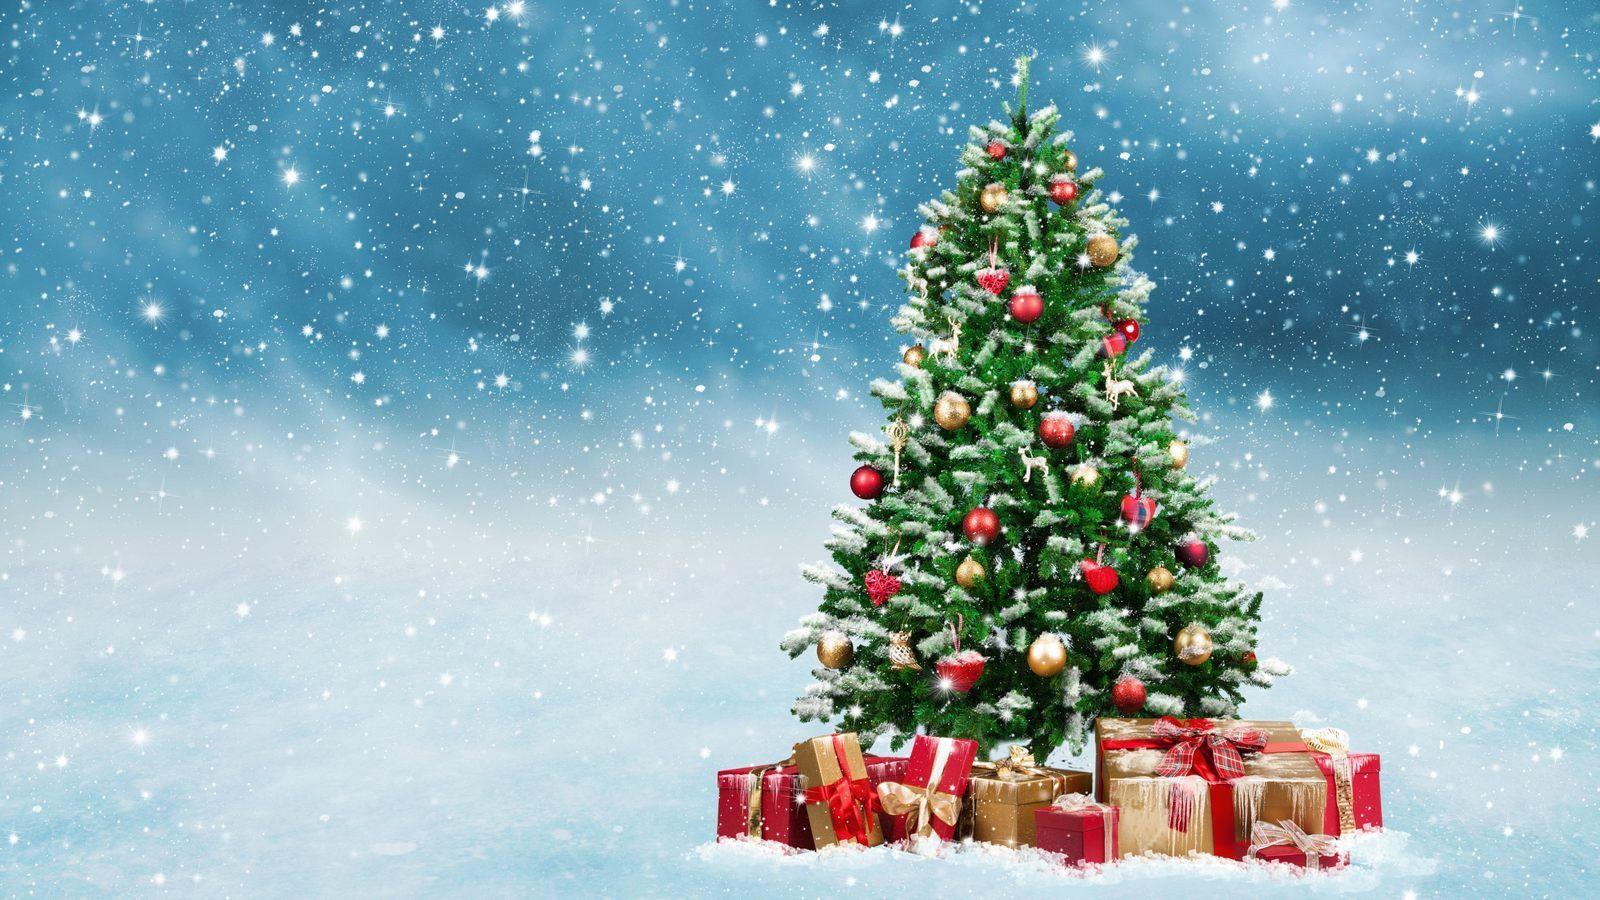 Обои \"Зима и Новый год\" на рабочий стол: самые яркие! | Christmas tree  images, Beautiful christmas, Beautiful christmas trees